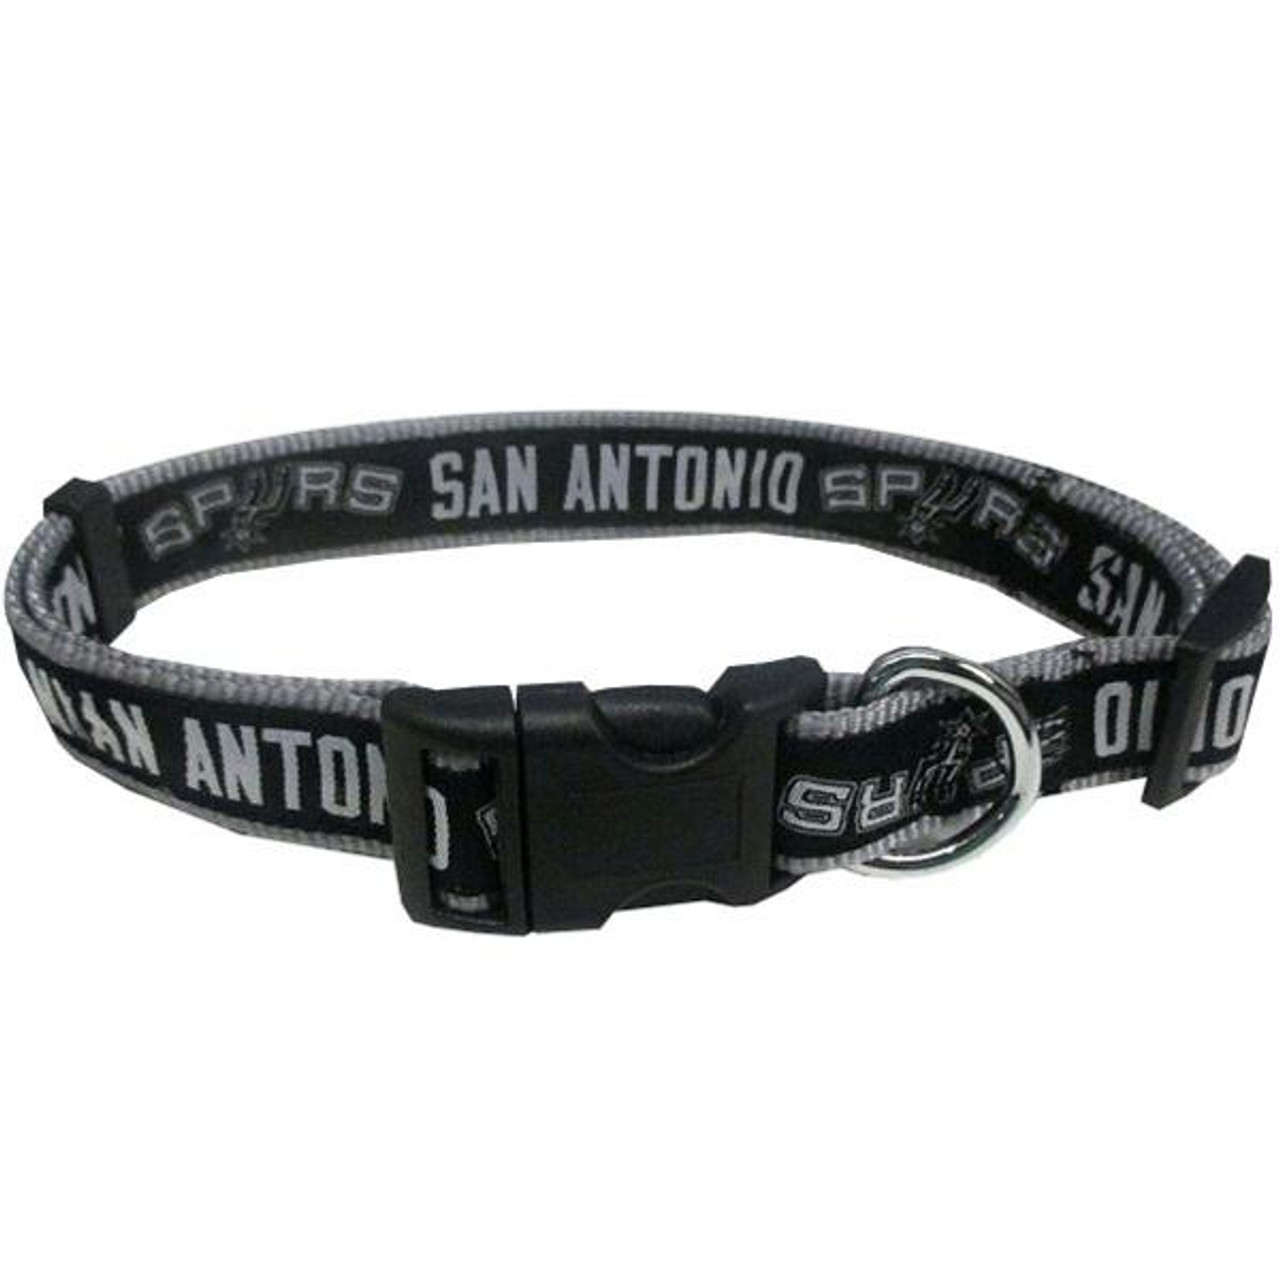 San Antonio Spurs Pet Gear